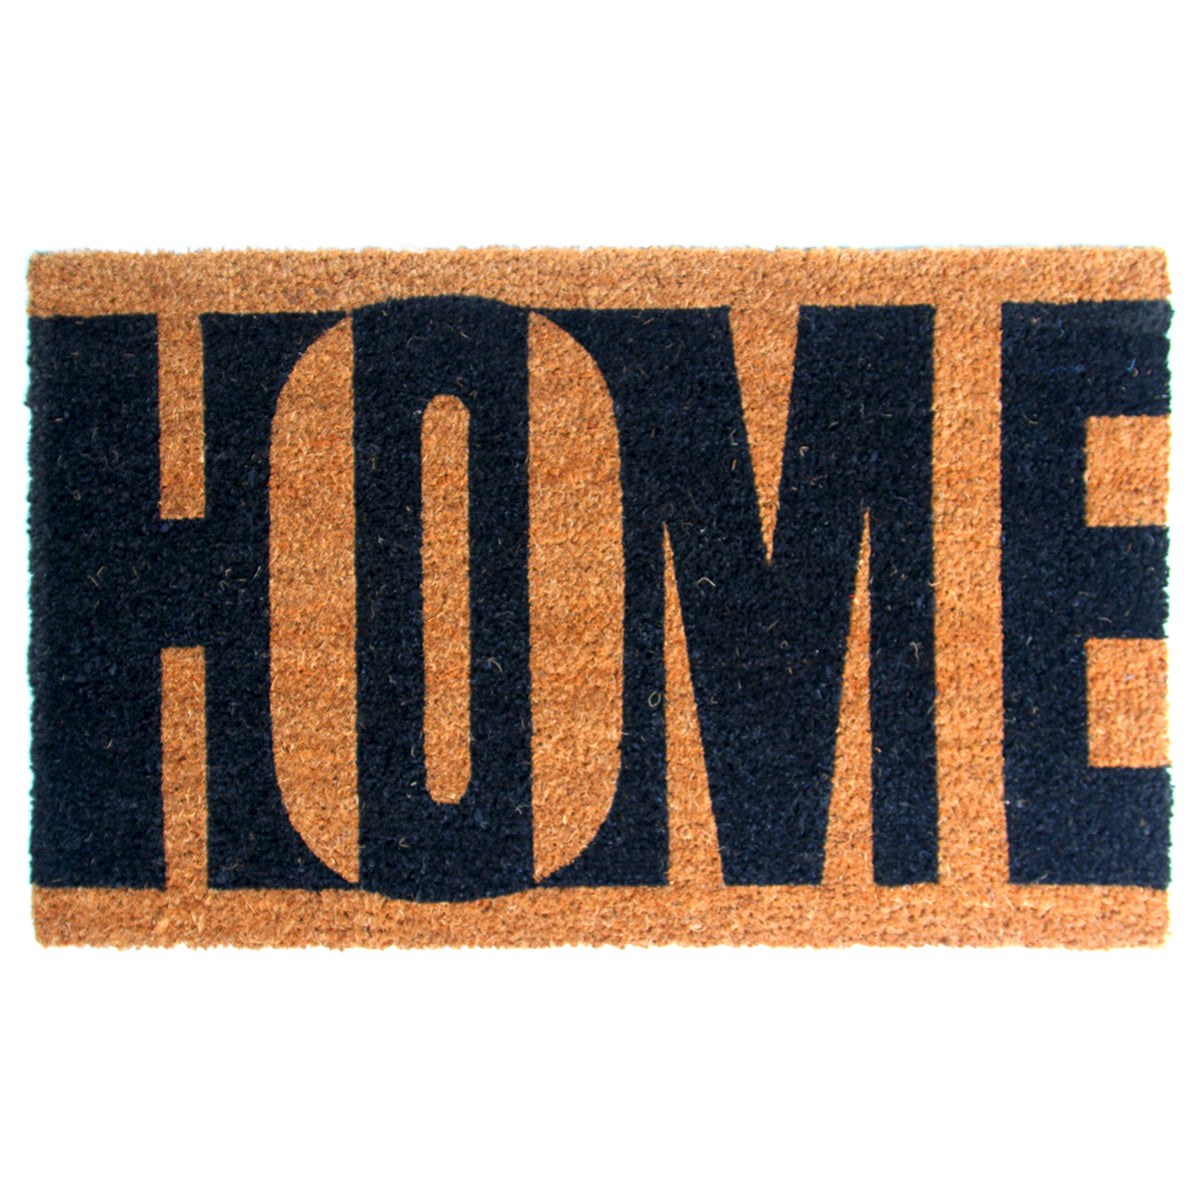 Home Printed Natural Coir Doormat - OnlyMat